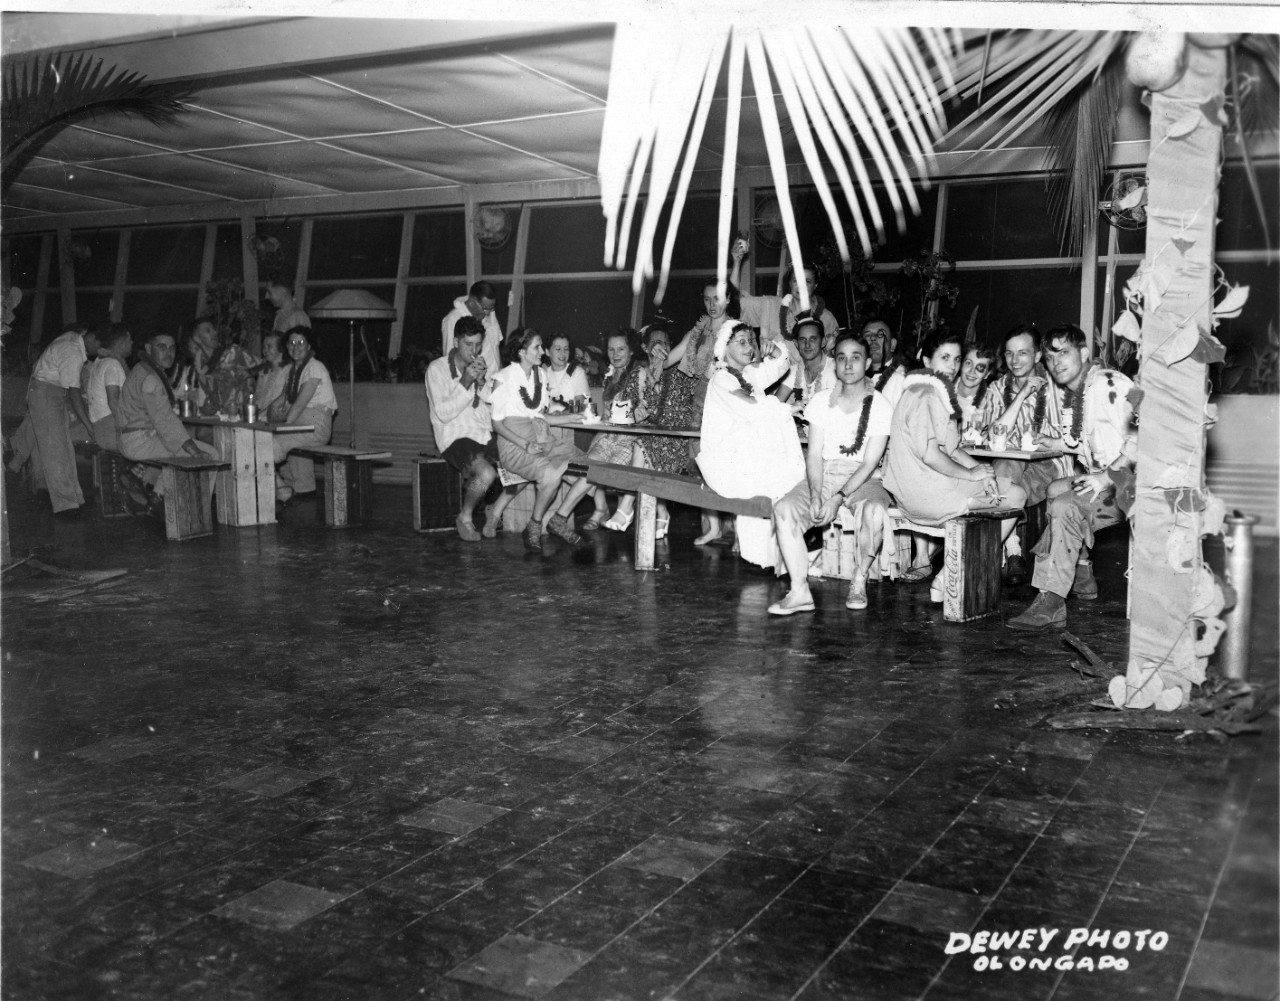 <p>2019.24.12 Party Olongapo, PI 1950's</p>
